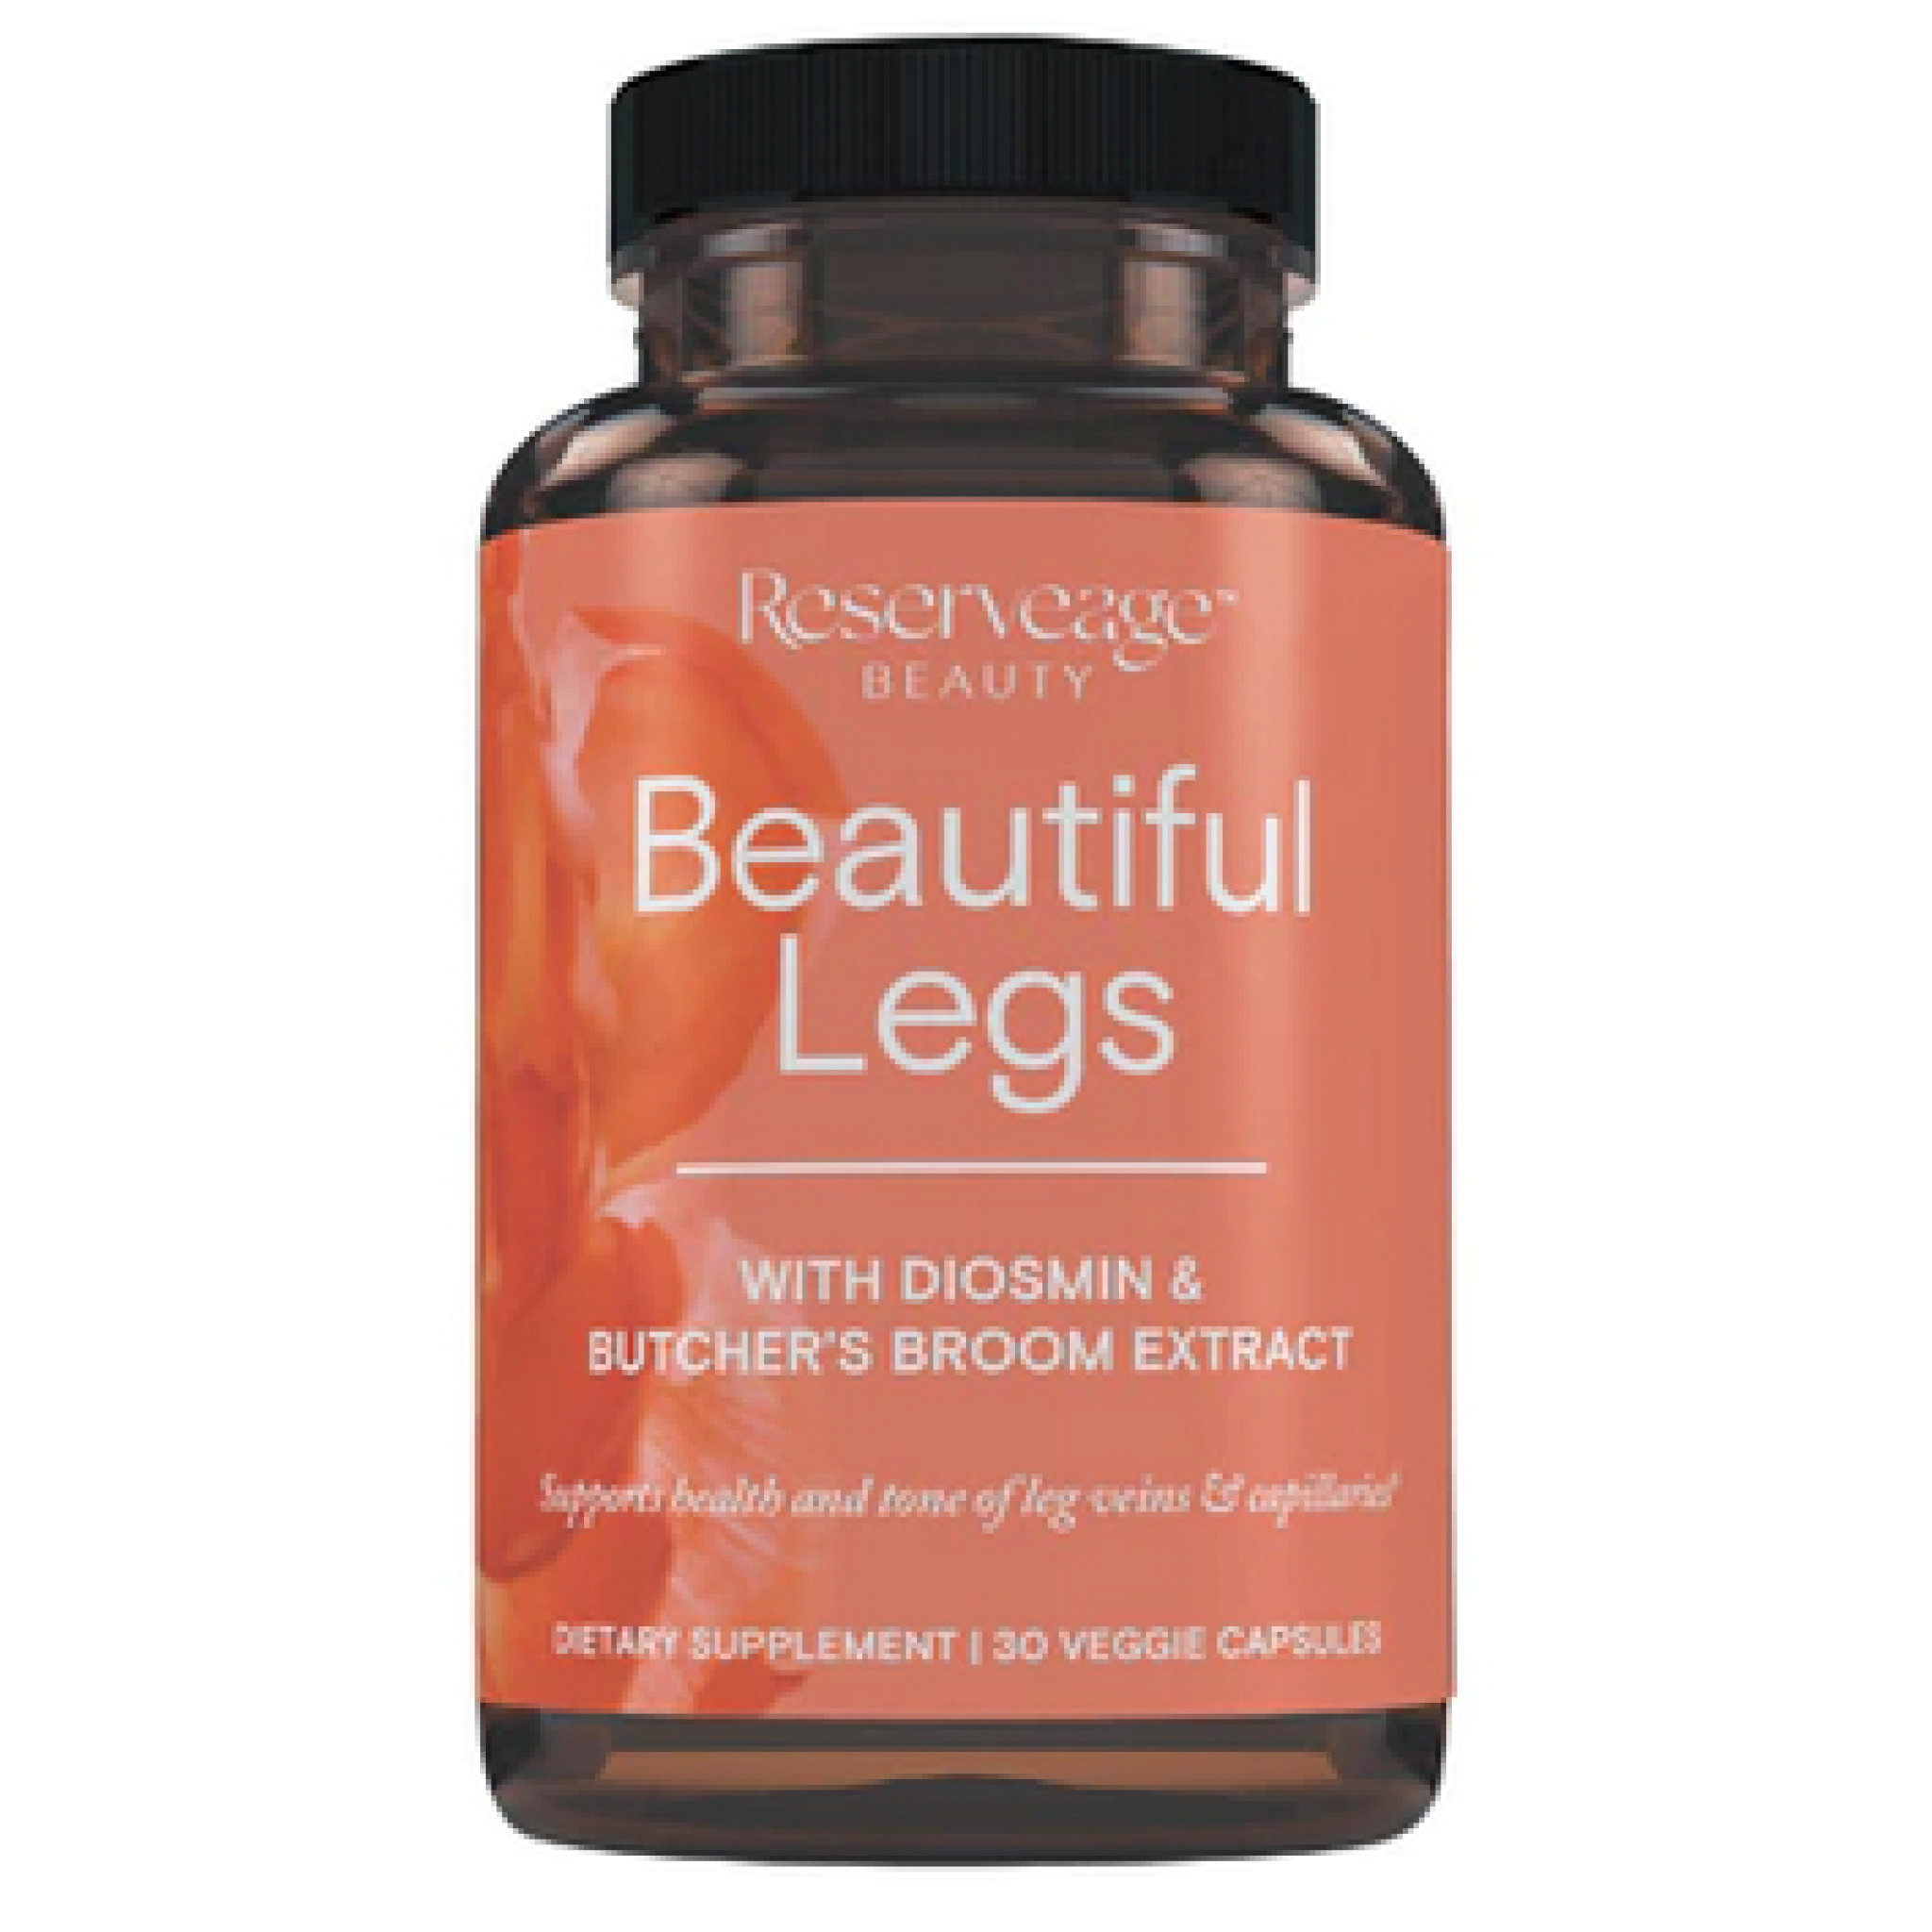 Reserveage Organics - Beautiful Legs